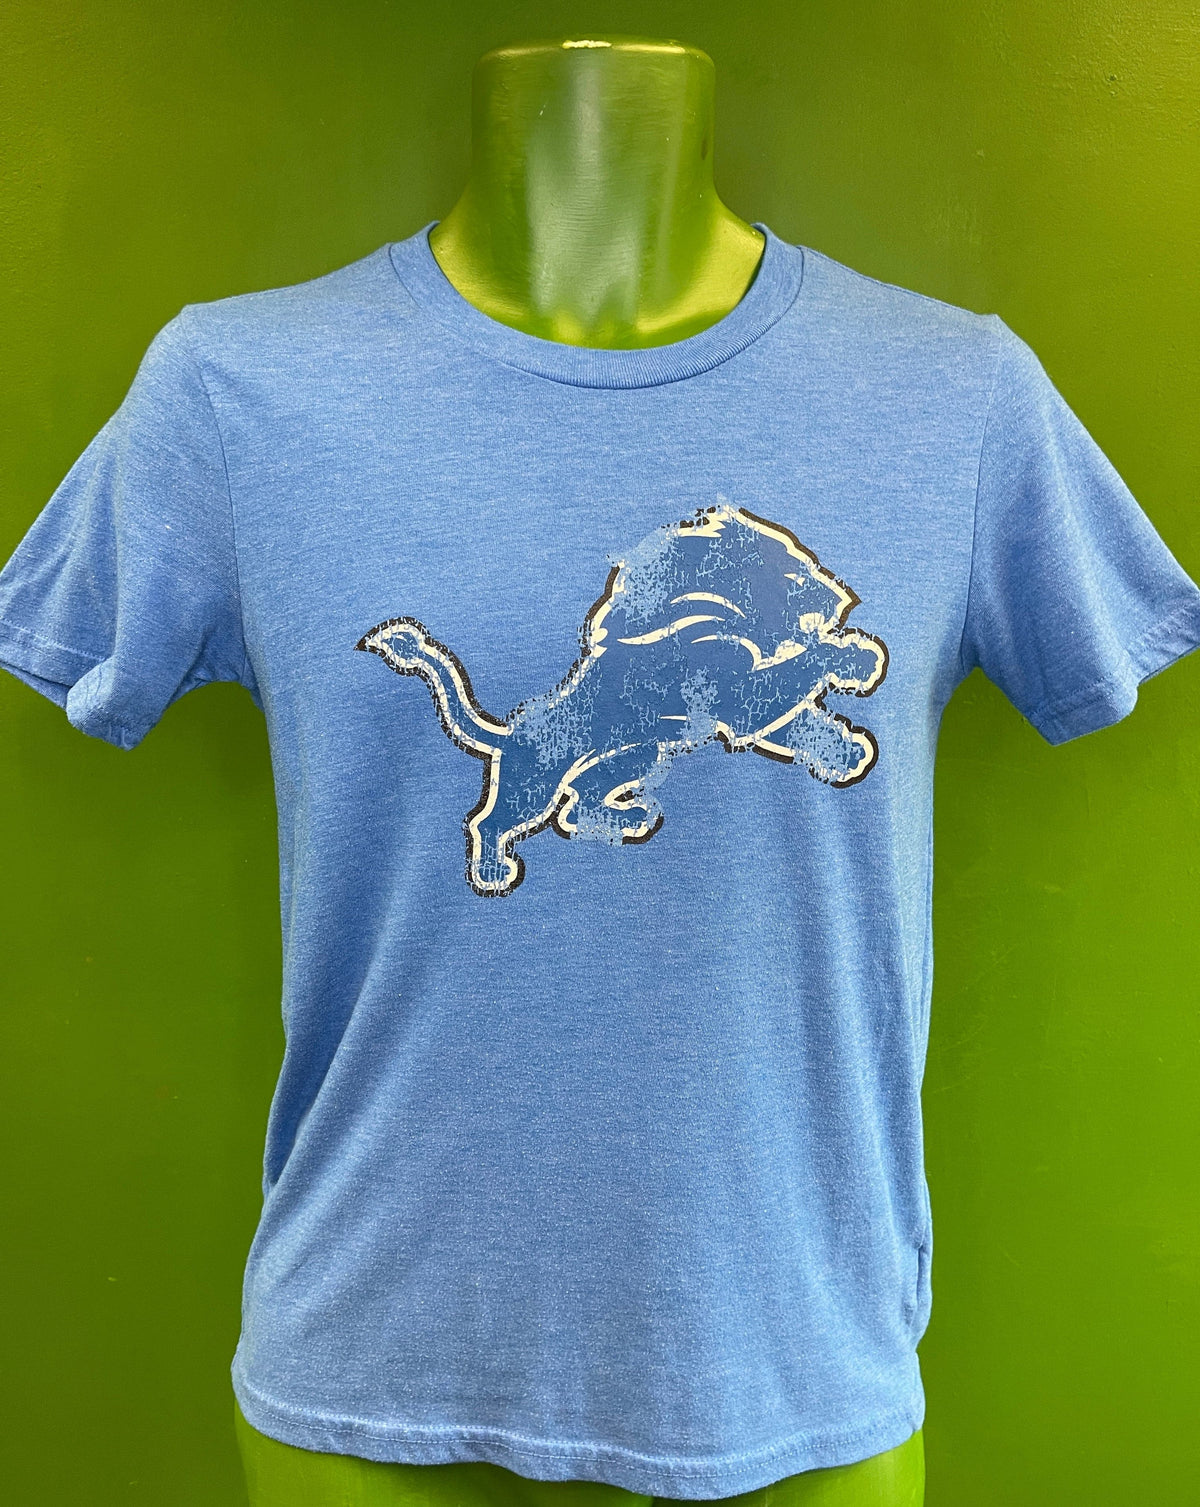 NFL Detroit Lions Tri-Blend T-Shirt Youth Medium 10-12